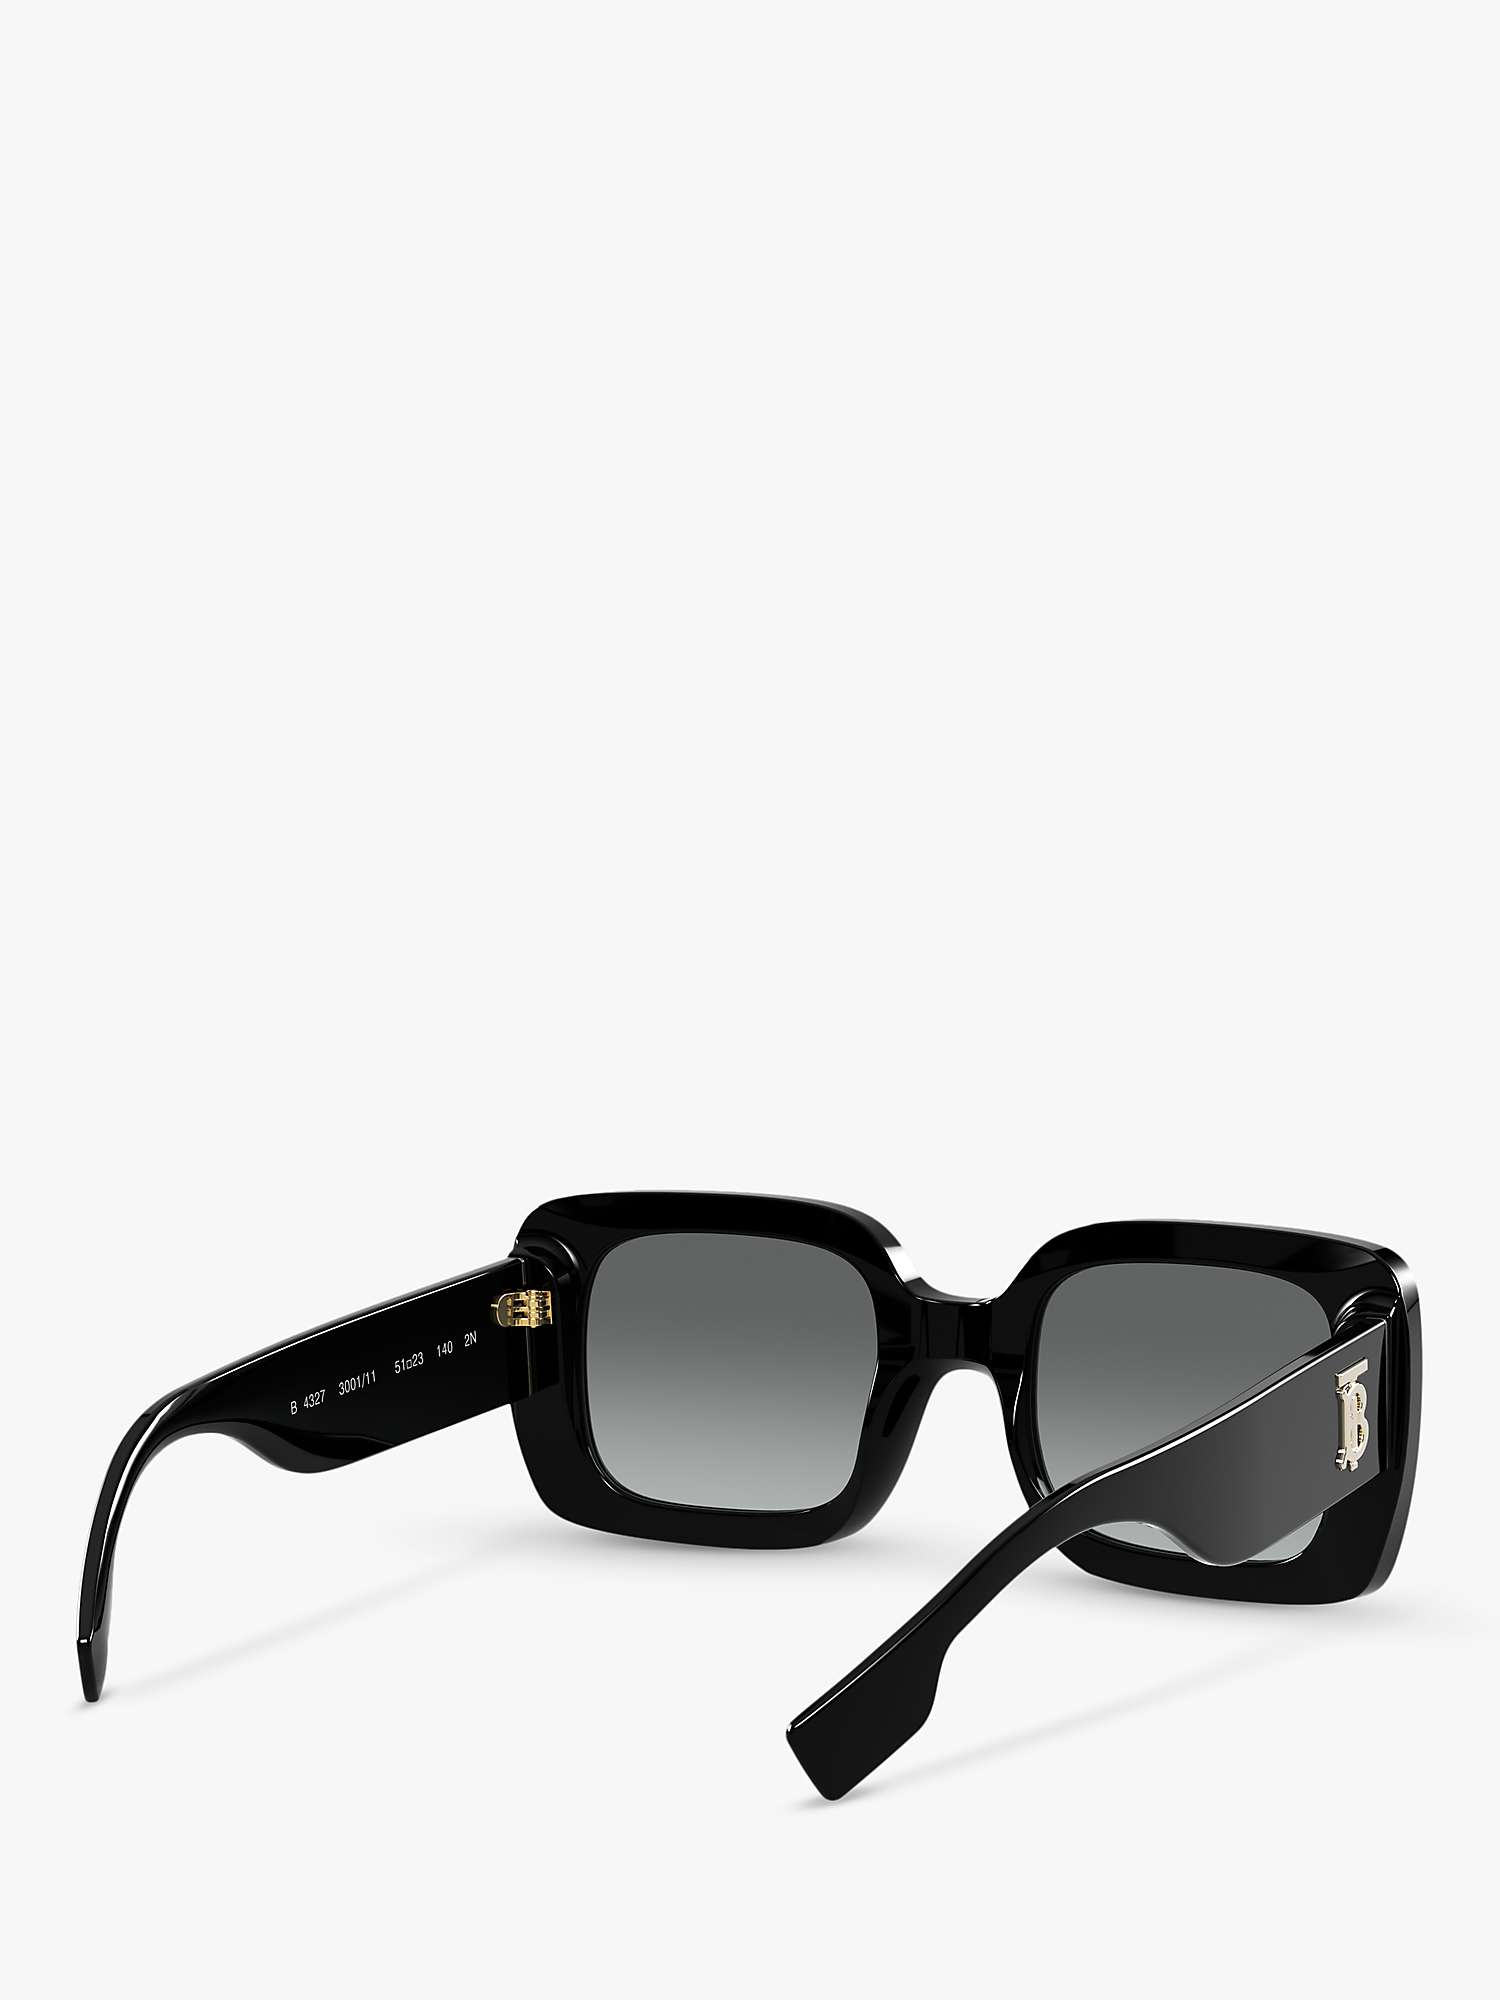 Buy Burberry BE4327 Women's Square Sunglasses, Black/Grey Gradient Online at johnlewis.com